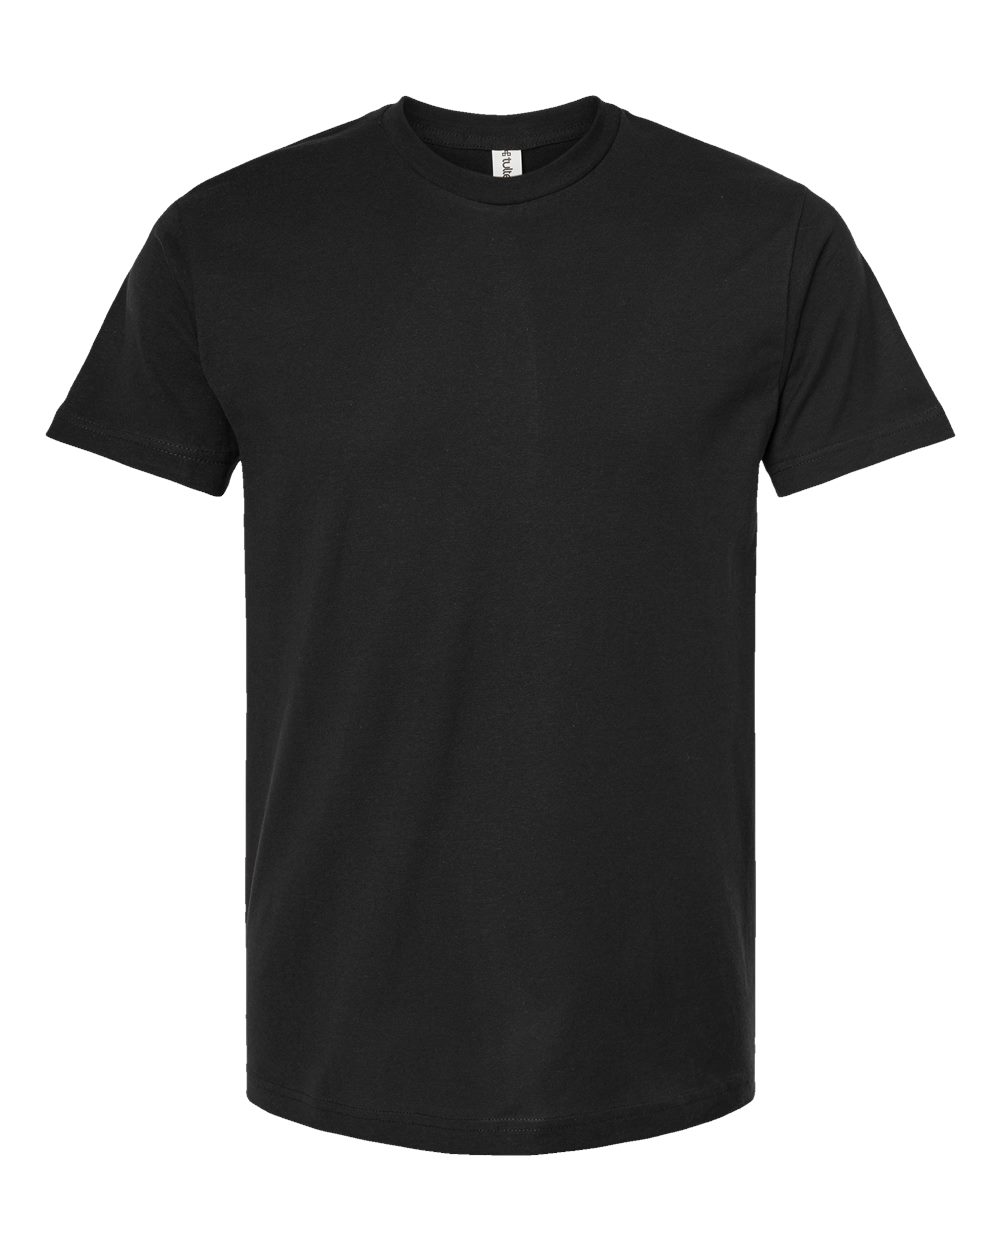 Tultex 202 Adult Shirt - Large-XXL